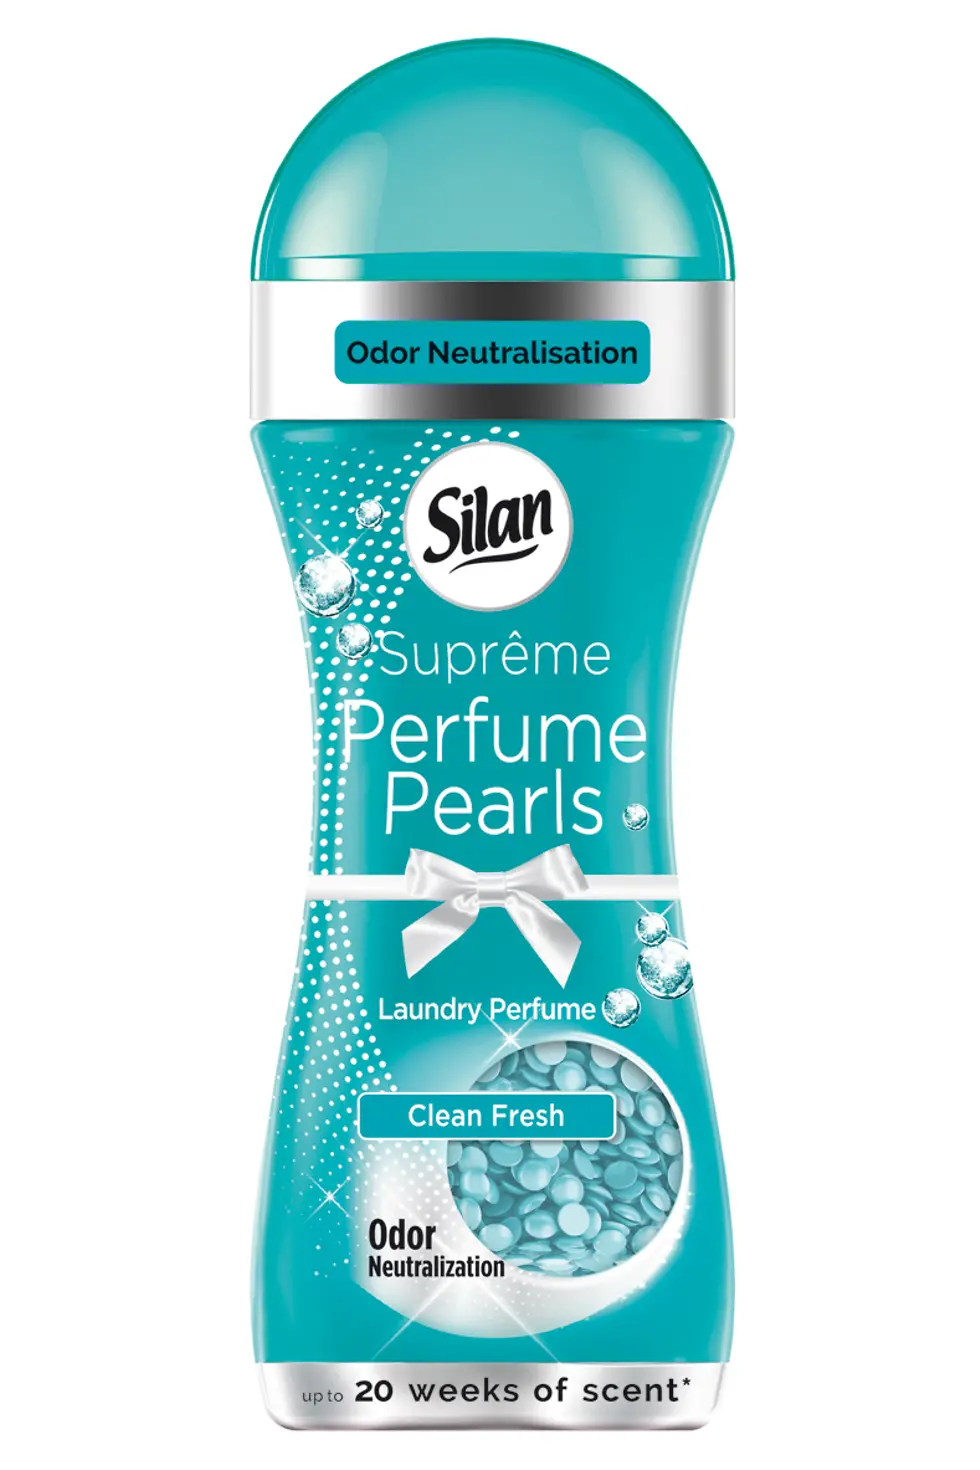 Silan Suprême Perfume Pearls ODOR NEUTRALIZATION